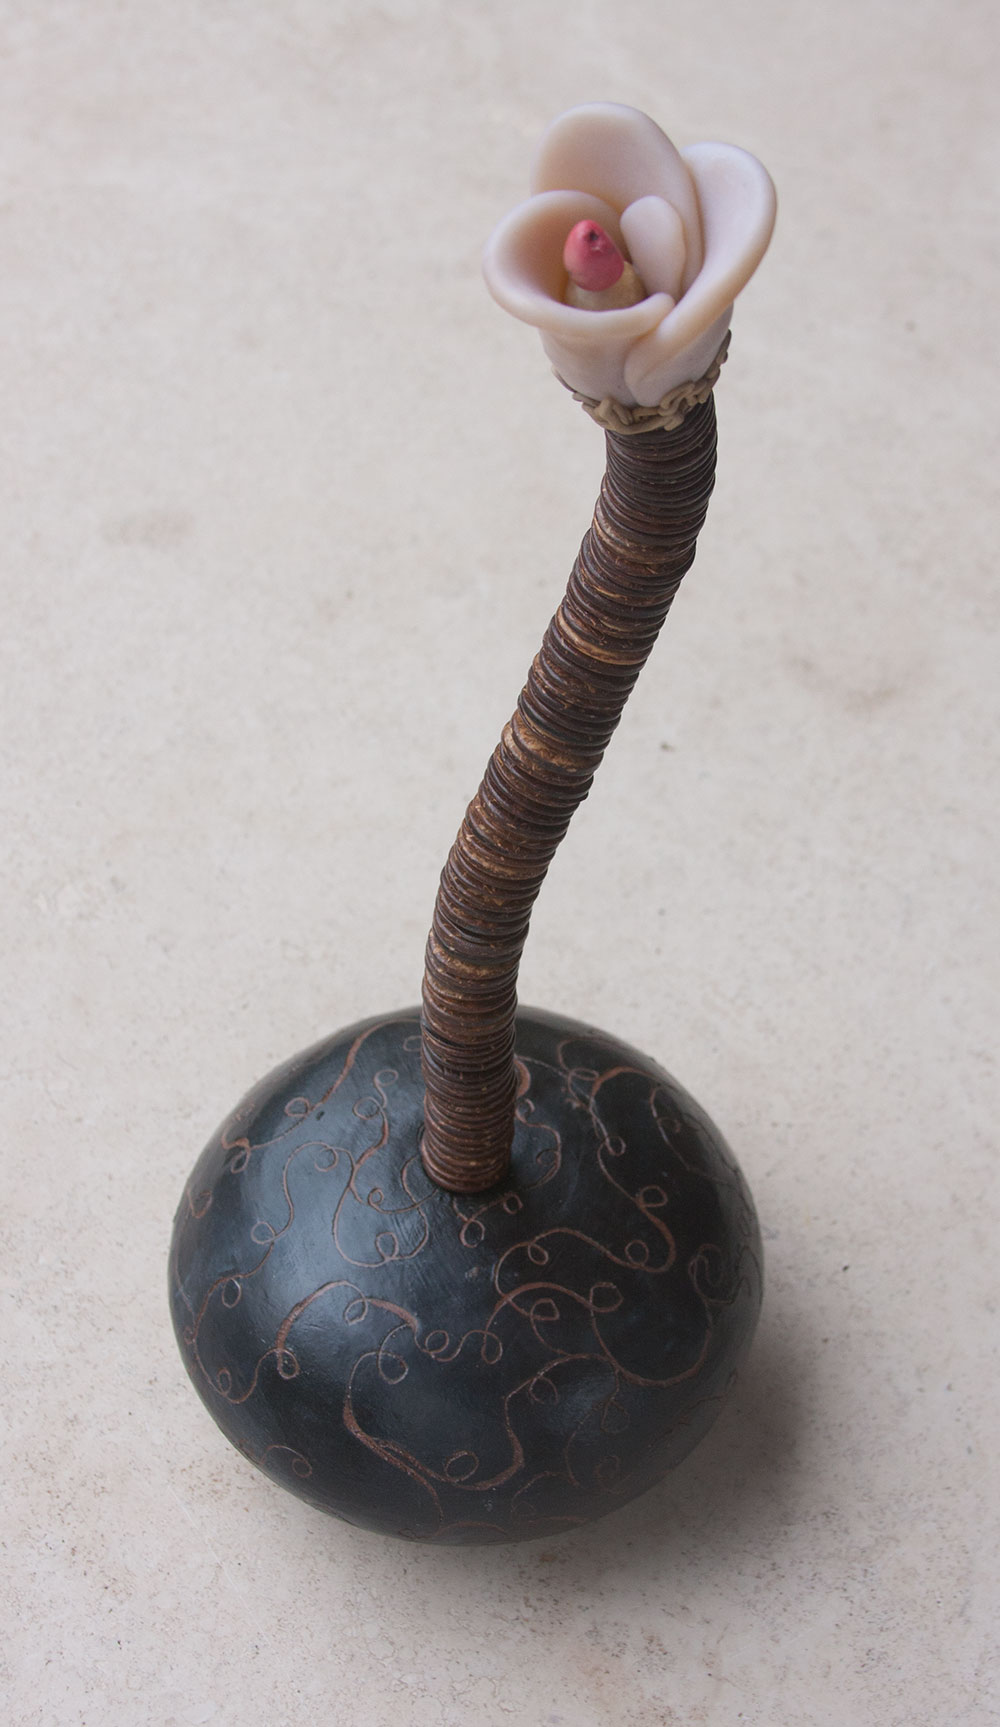 Proboscis 2, 6" sphere, 18" long, mixed media
(sold)